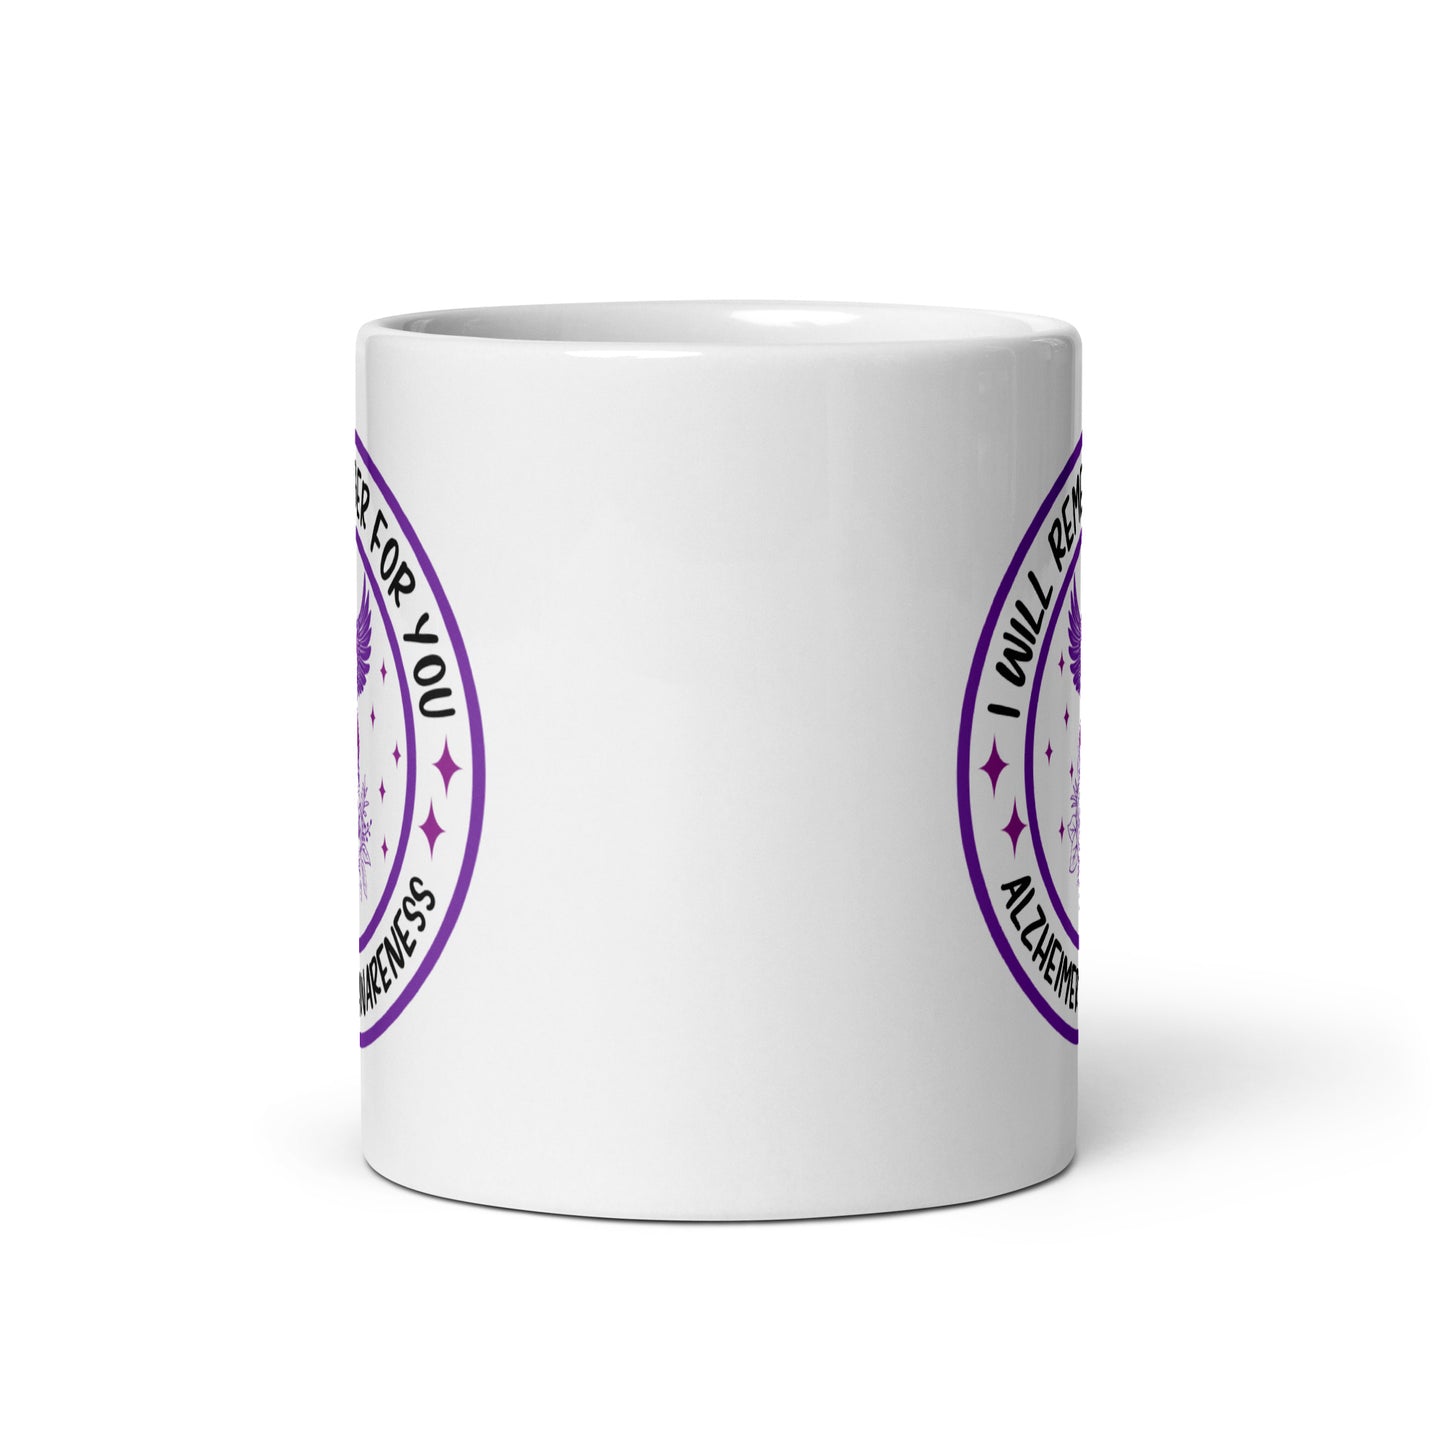 I'll Remember for You Alzheimer's Awareness Ceramic Coffee Mug